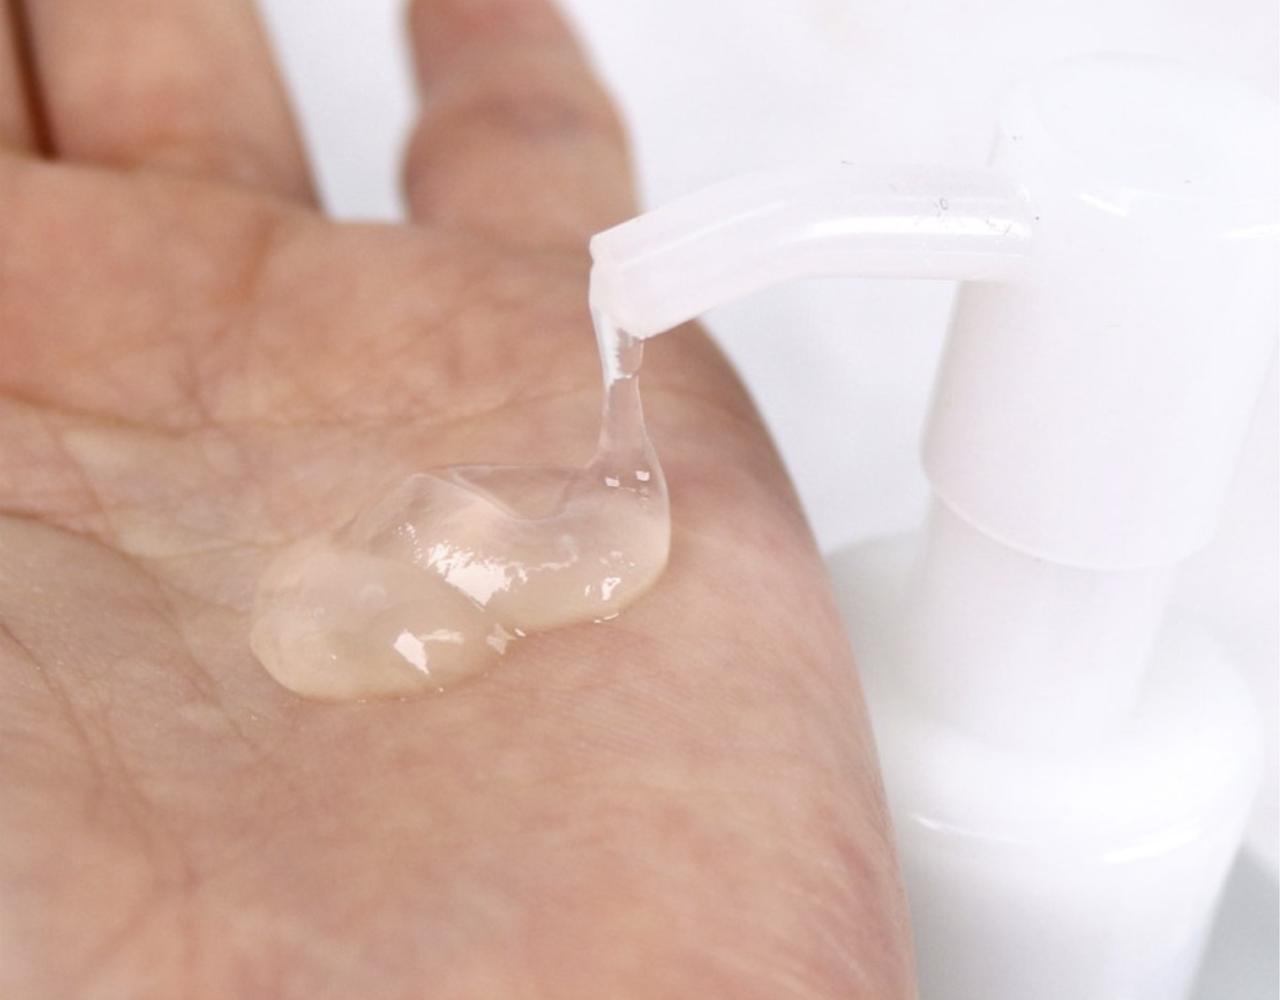 korean brand primera mild facial peeling gel pumped onto hand